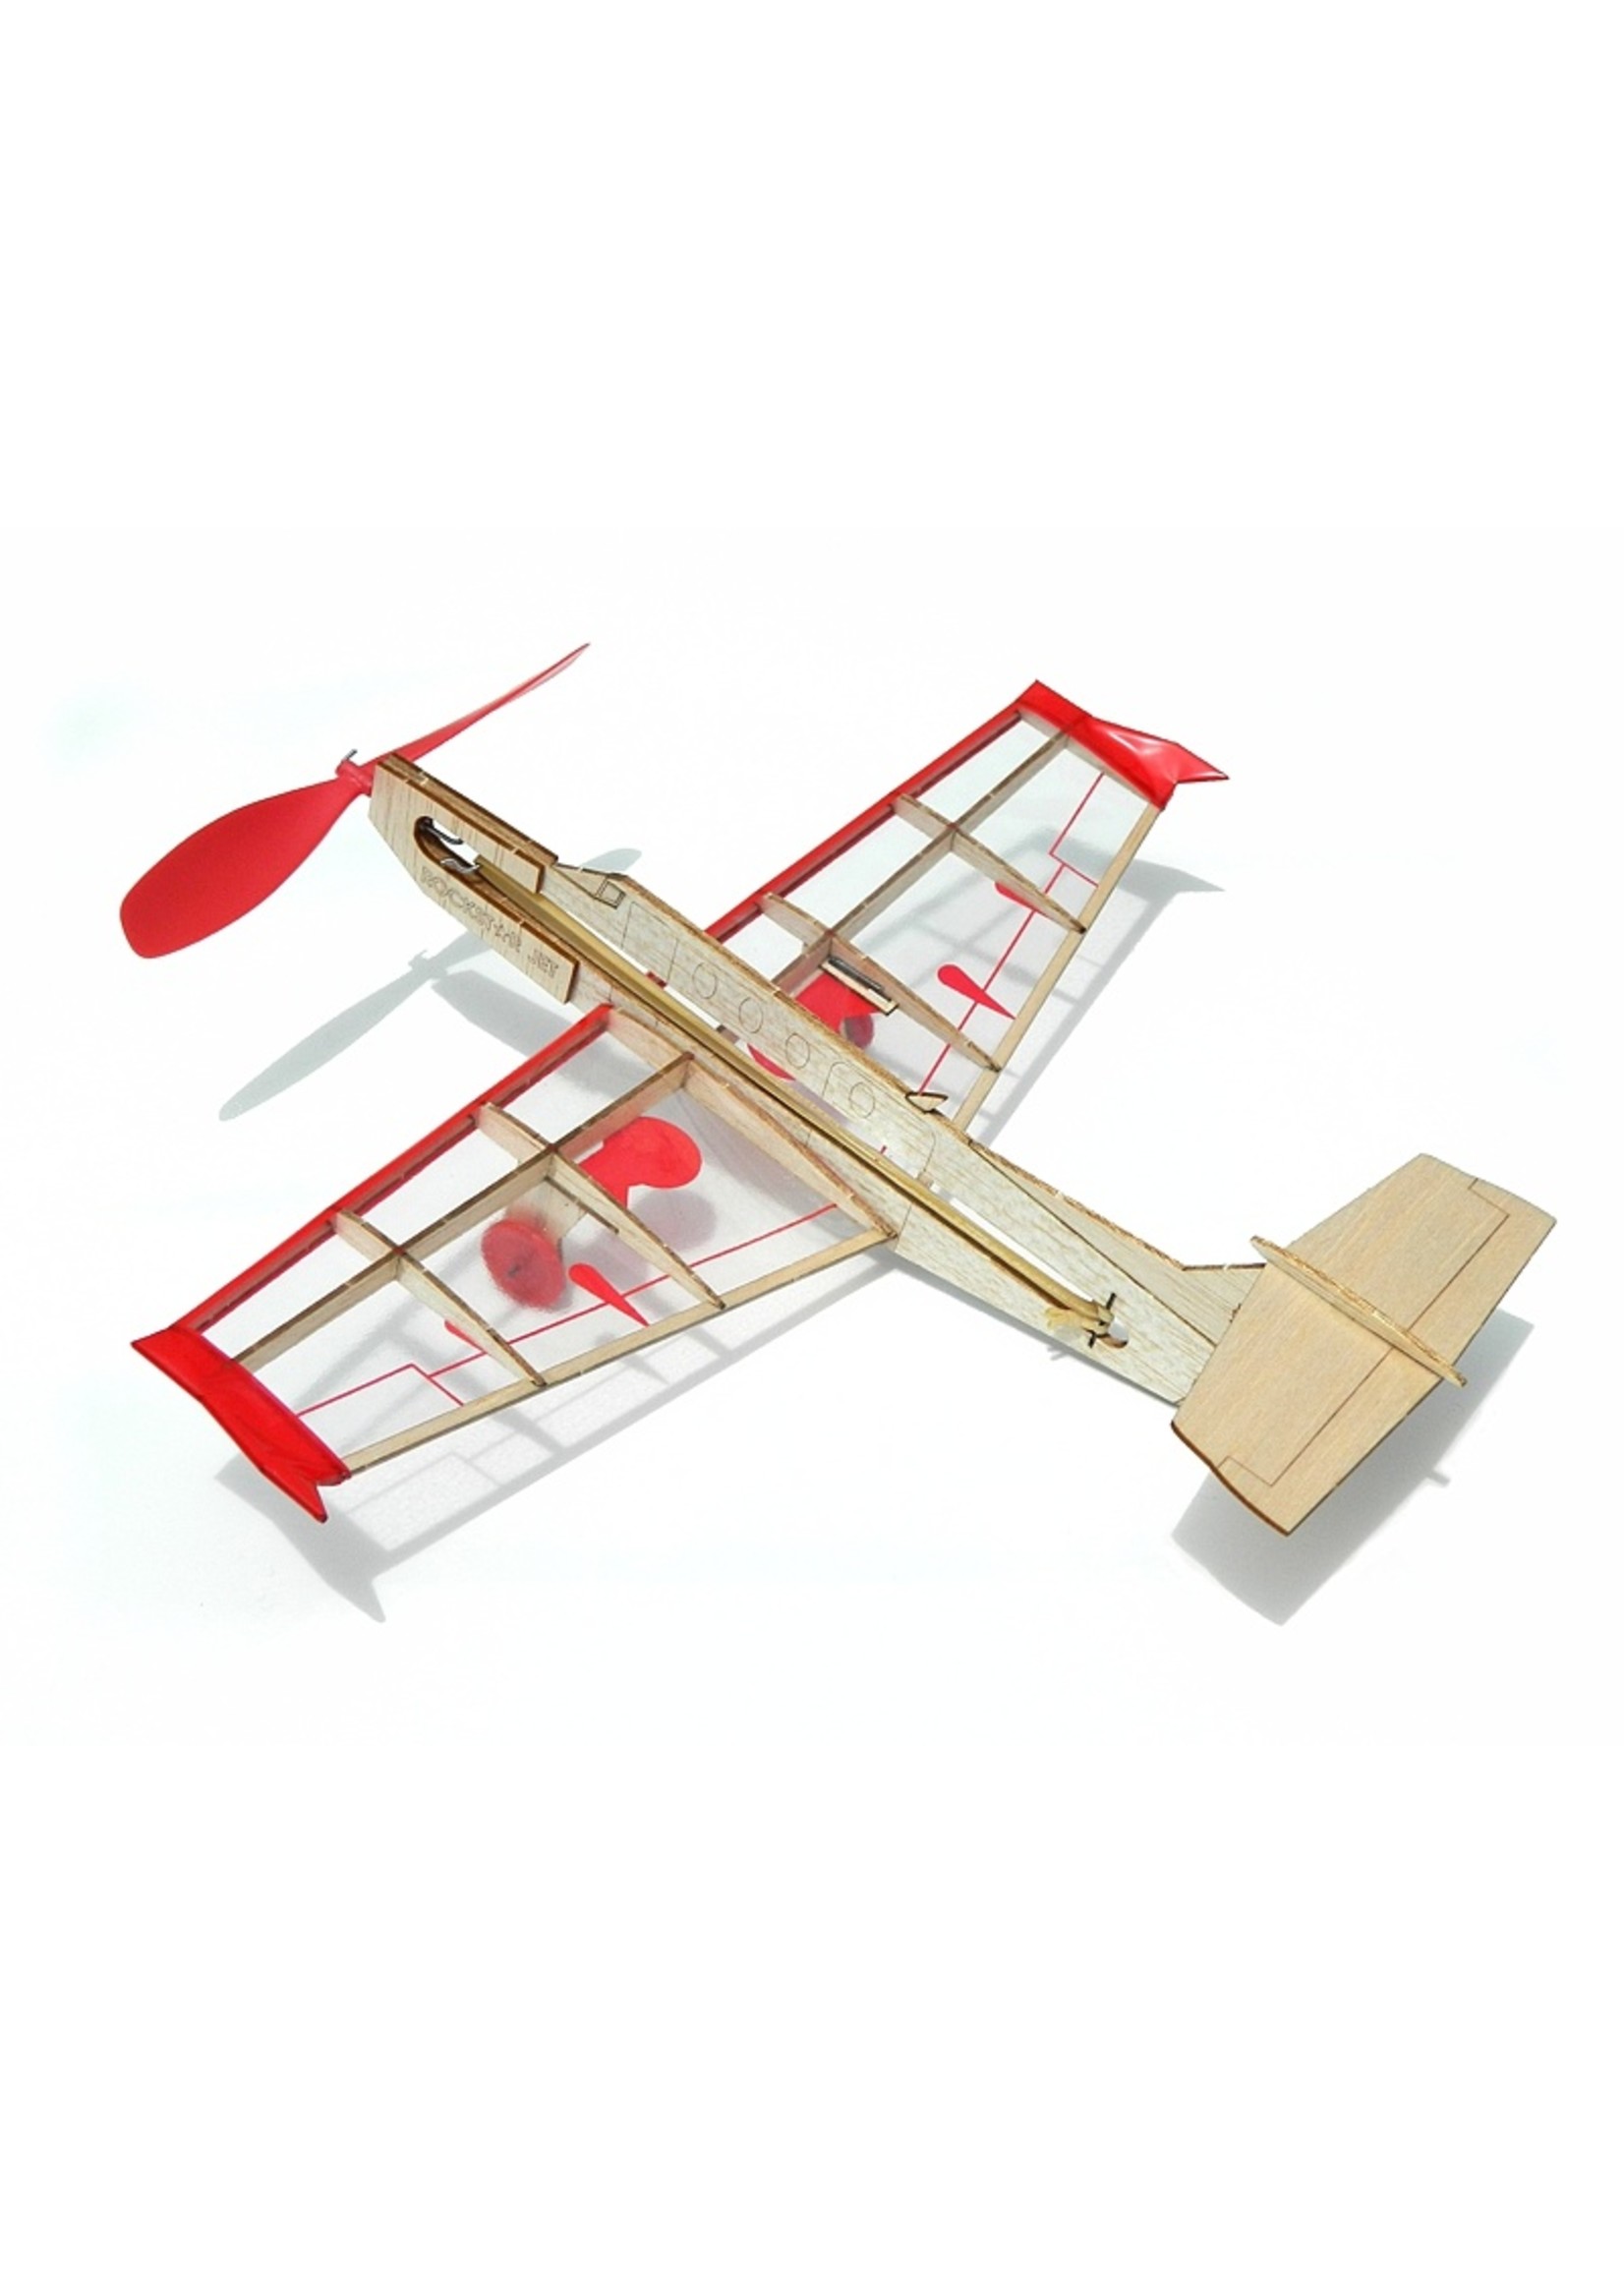 Guillows Rockstar Jet - Balsa Motorplane Mini Model